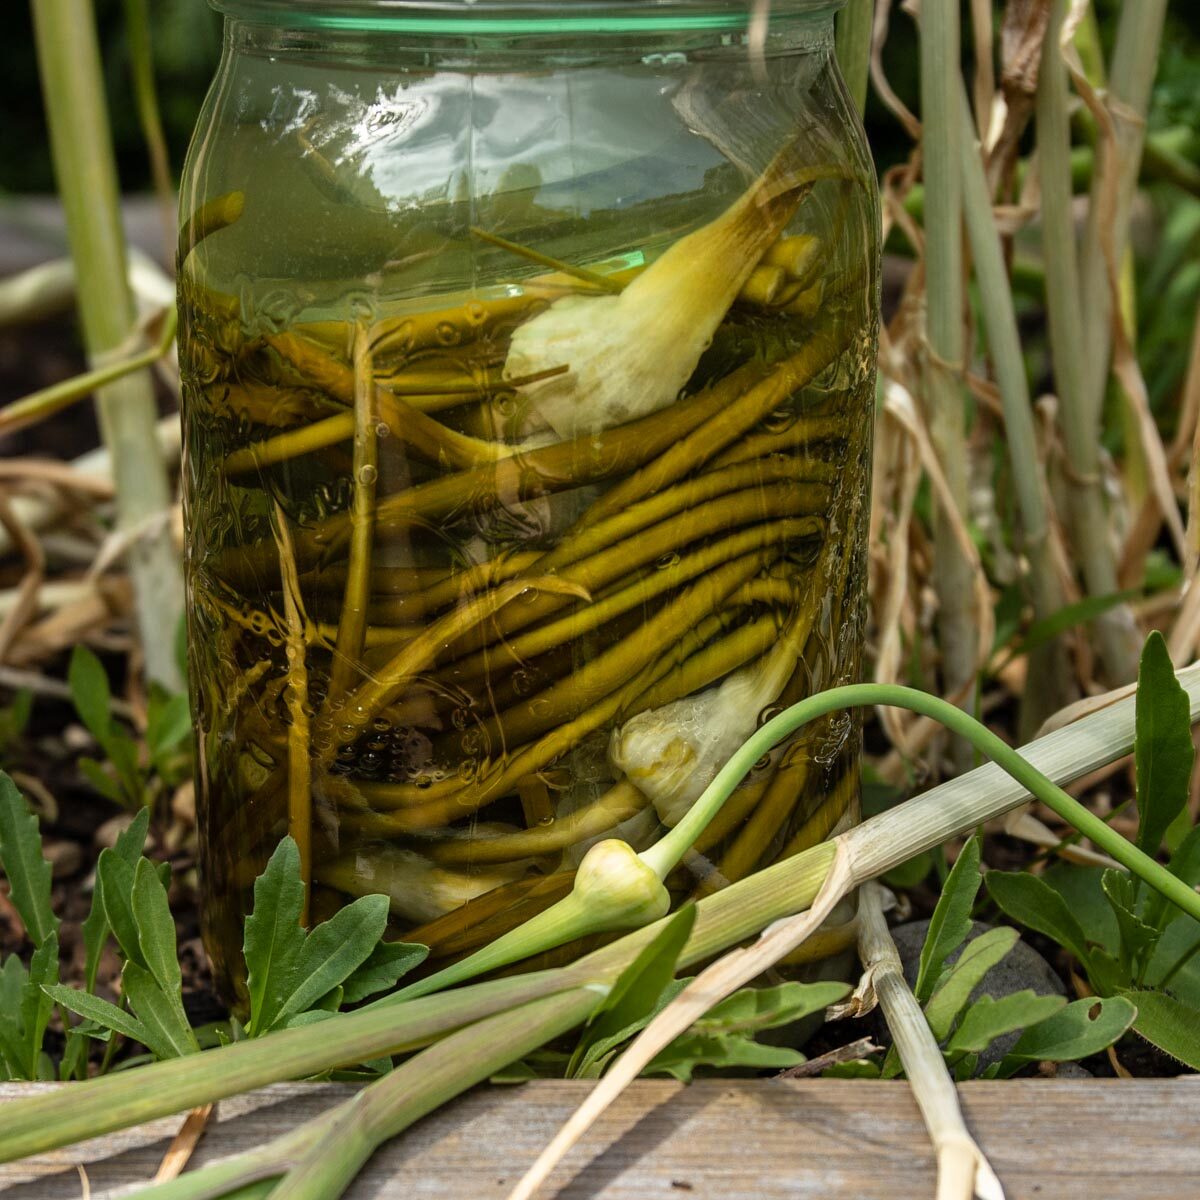 Salt water brine covering garlic scapes in a mason jar